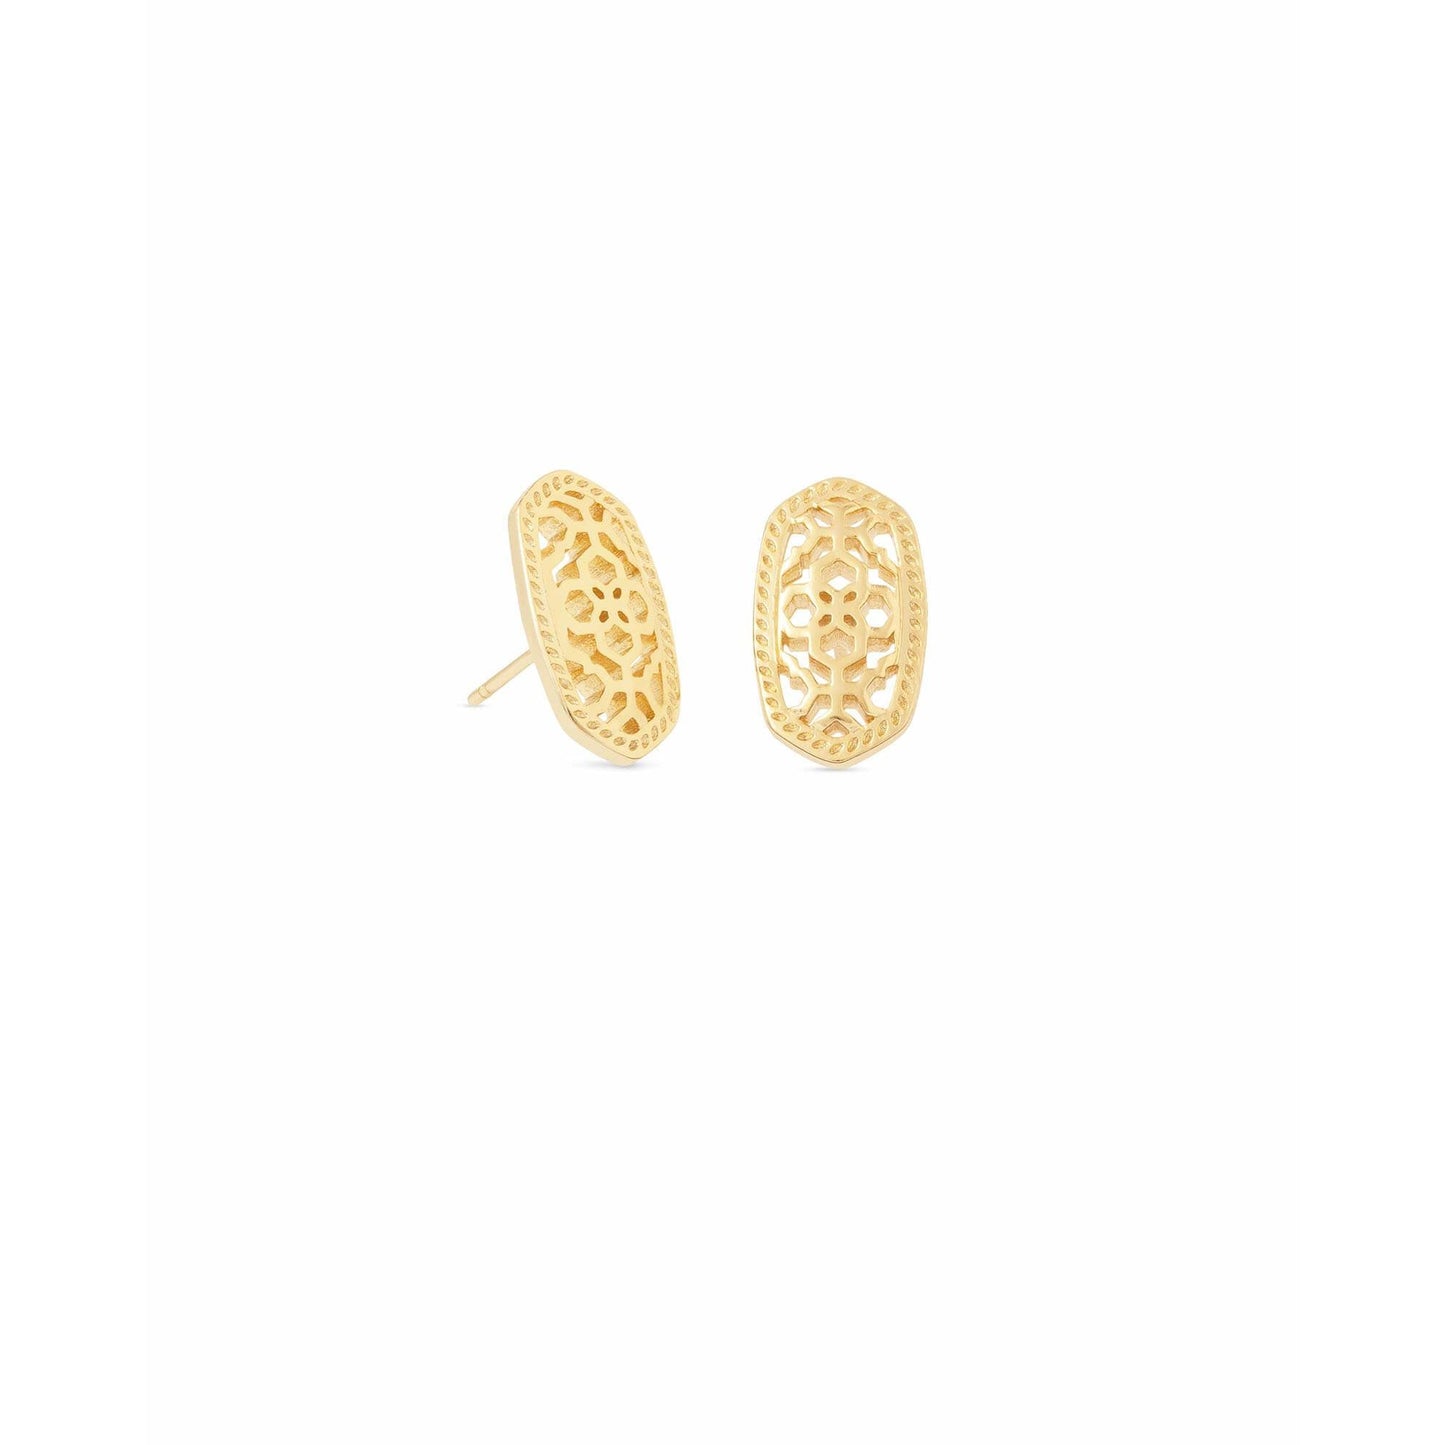 Kendra Scott - Ellie Gold Stud Earrings in Gold Filigree Mix - Findlay Rowe Designs